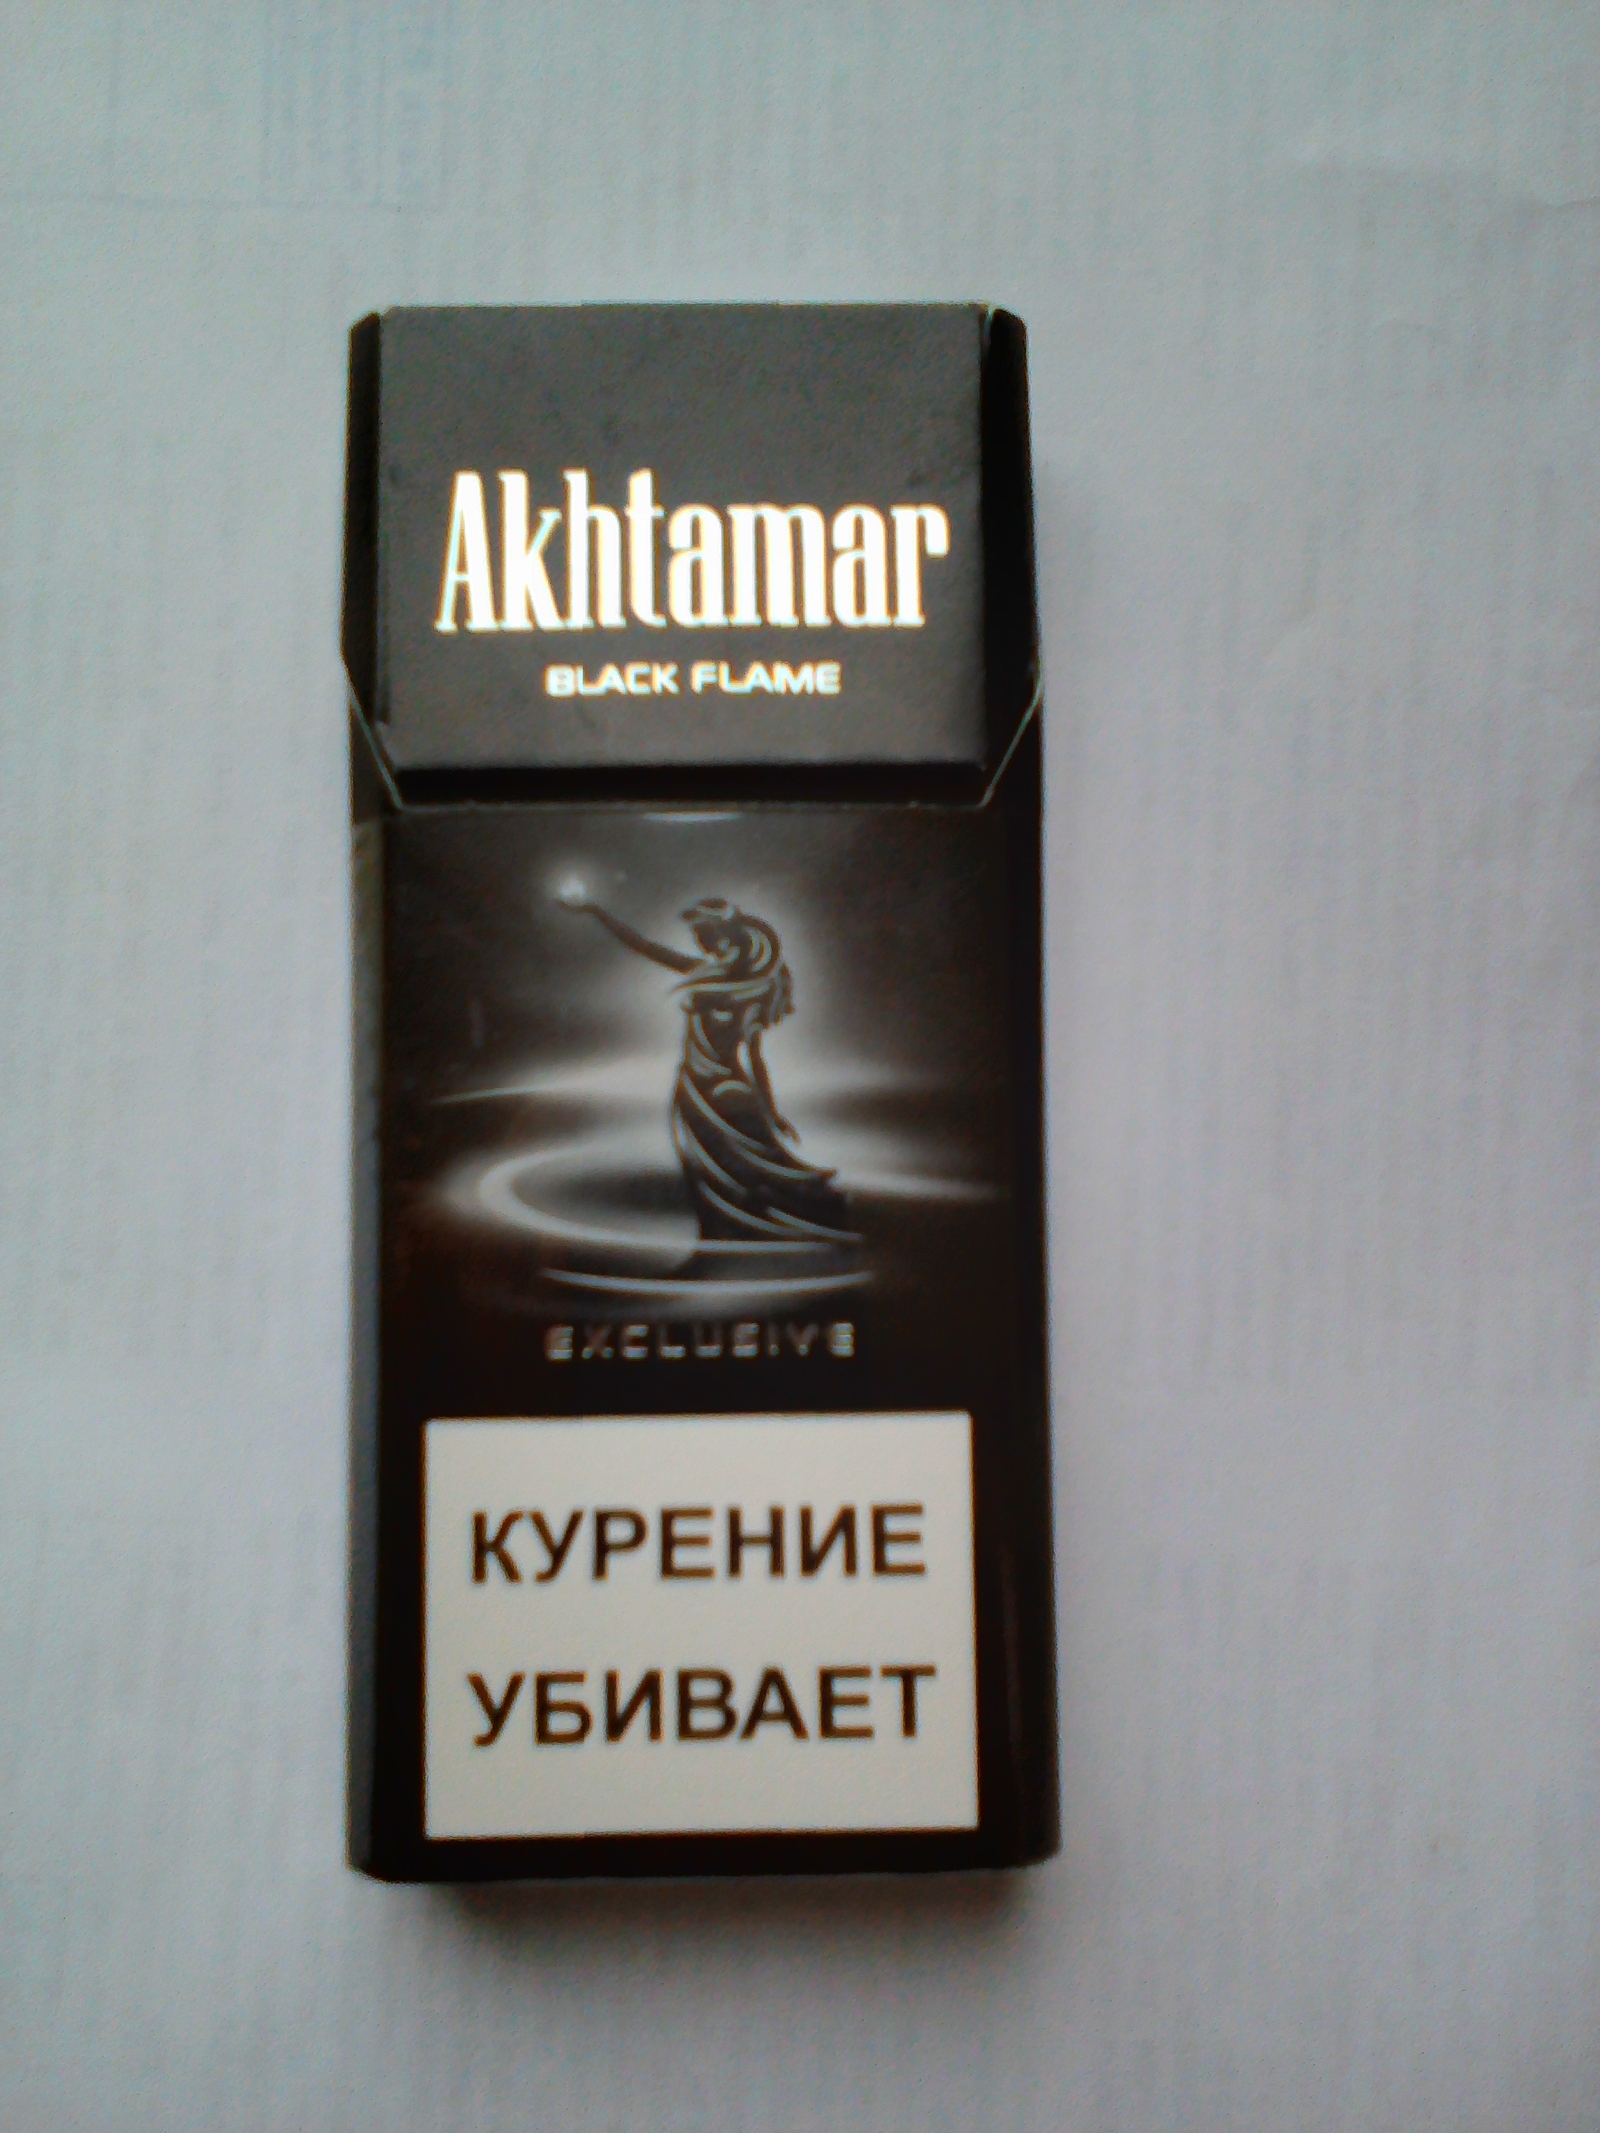 Купить сигареты ахтамар